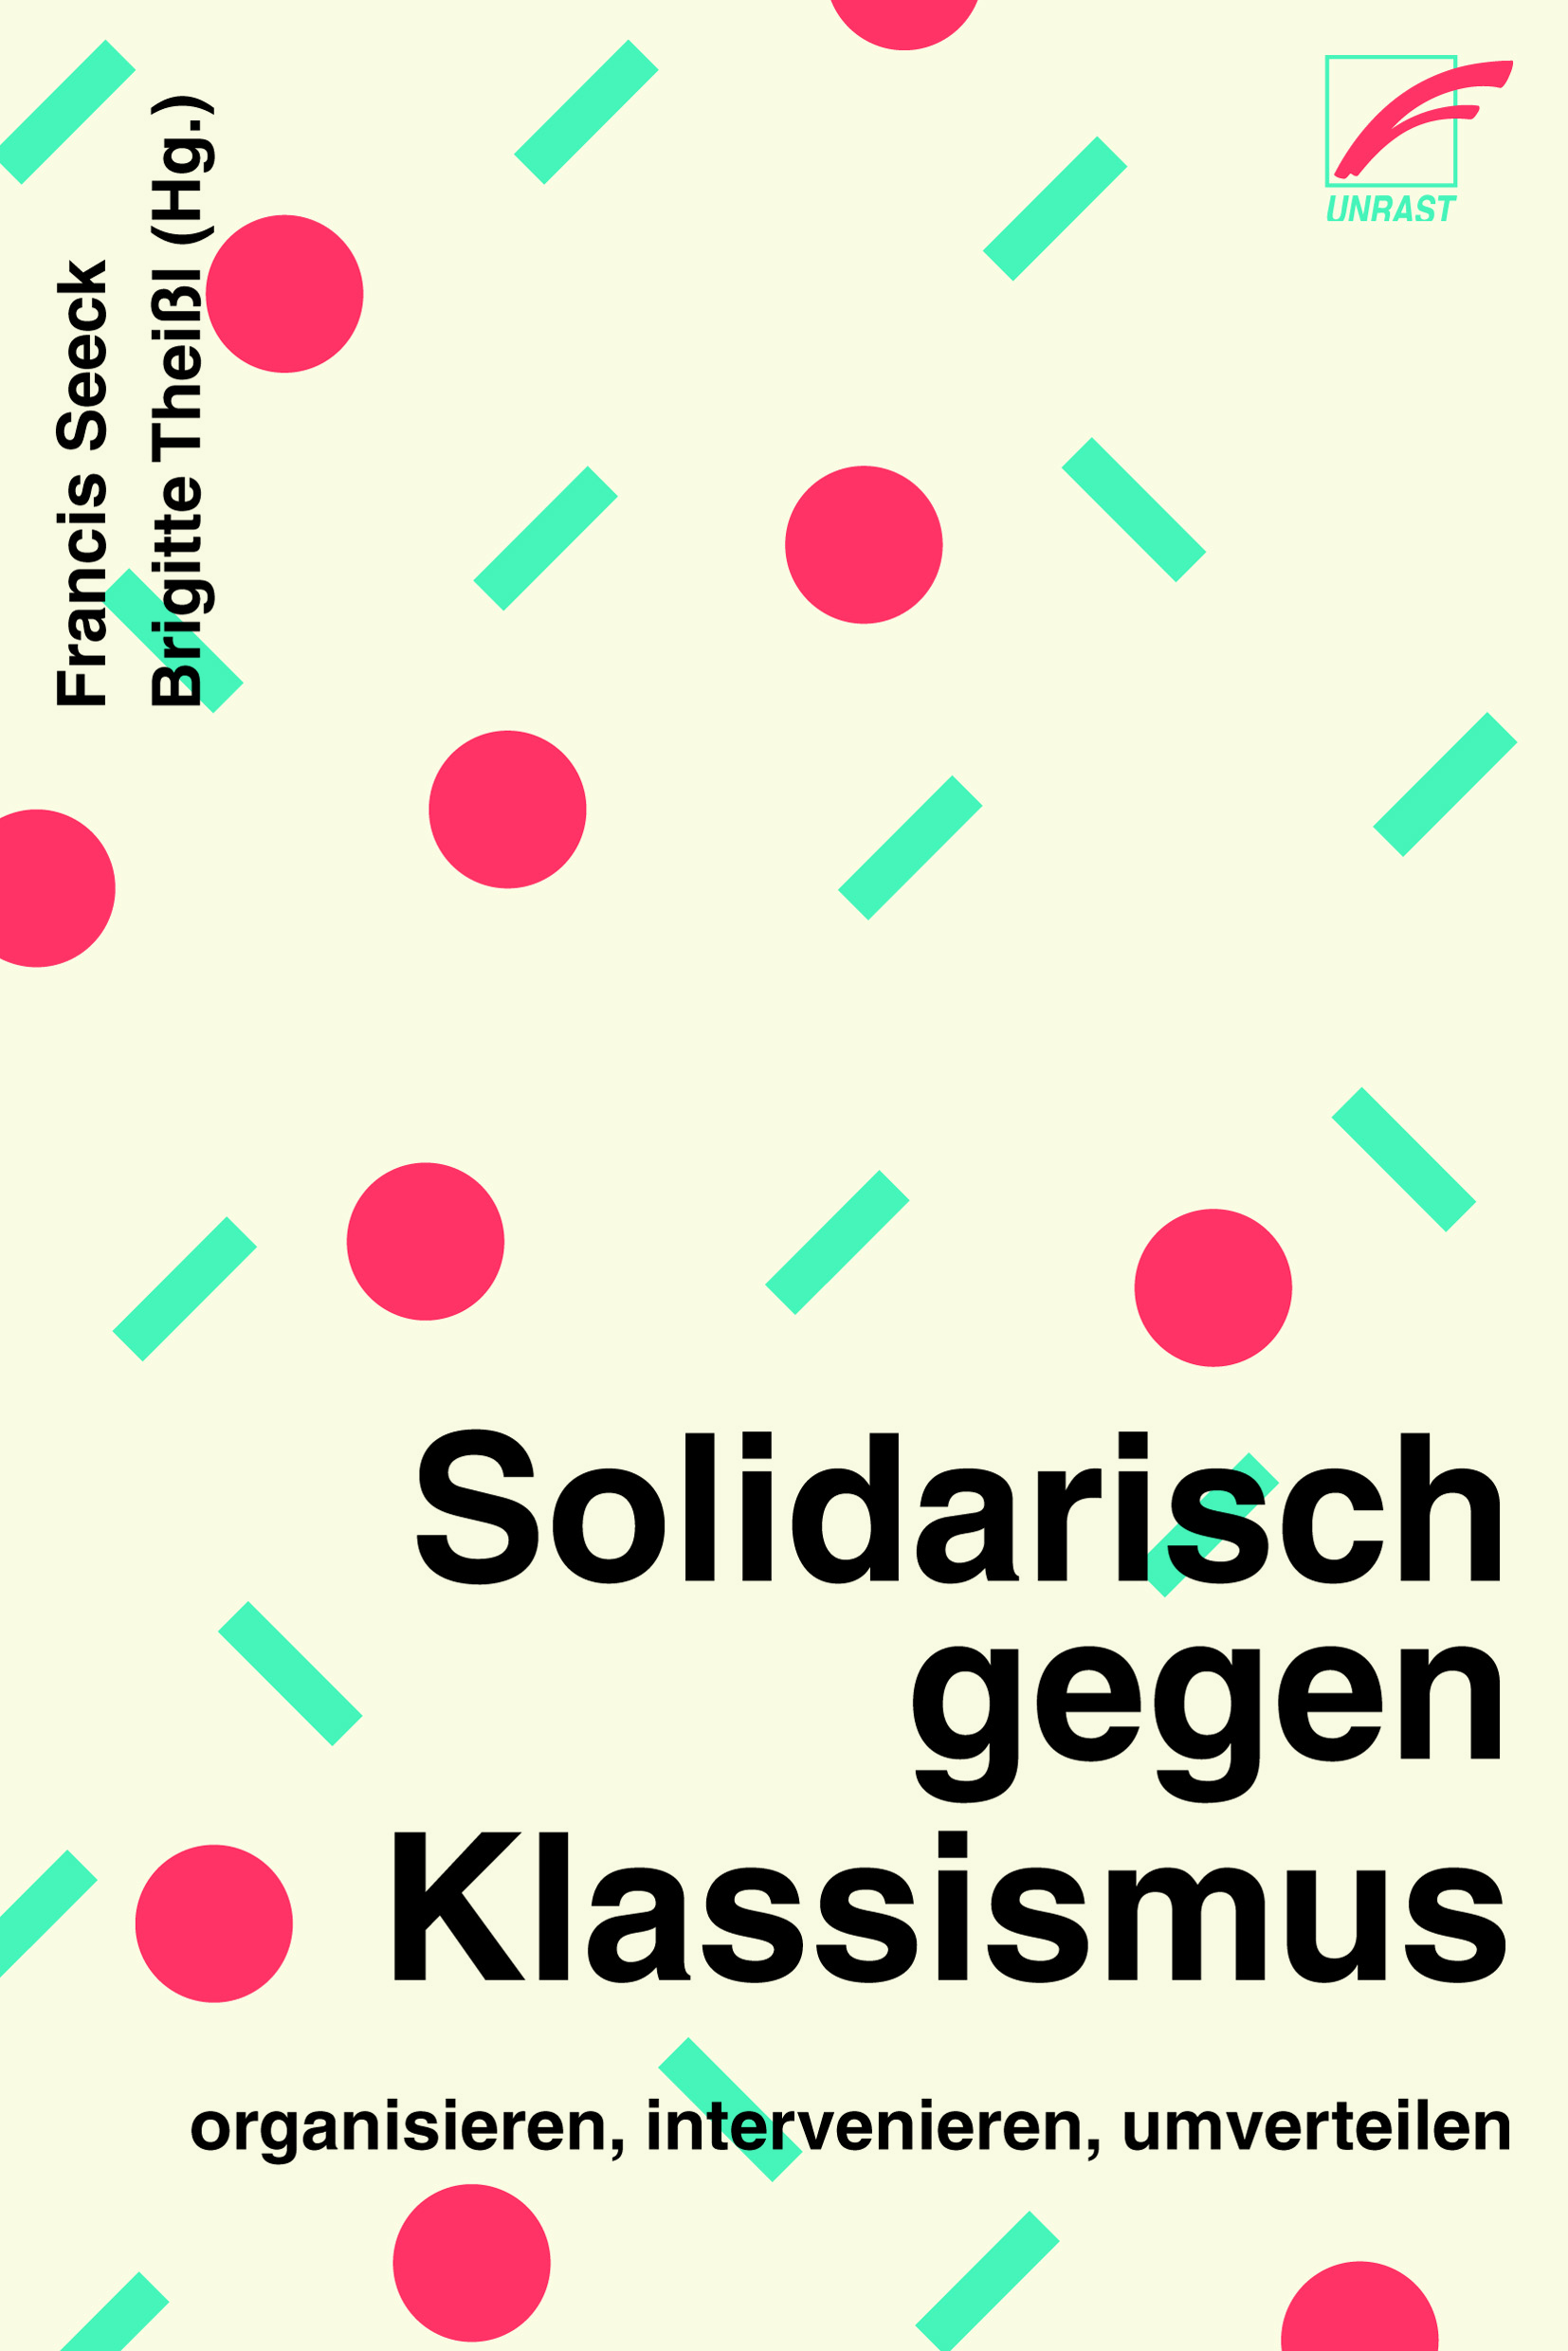 Brigitte Theißl, Francis Seeck: Solidarisch gegen Klassismus (EBook, German language, 2020, Unrast)